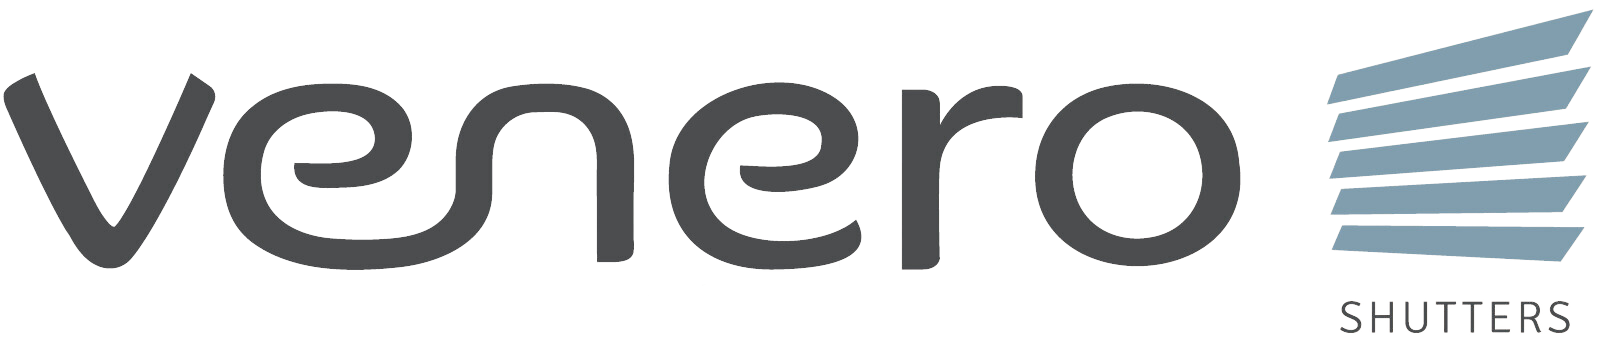 Logomarca Venero Shutters - Persiplus Persianas e Cortinas